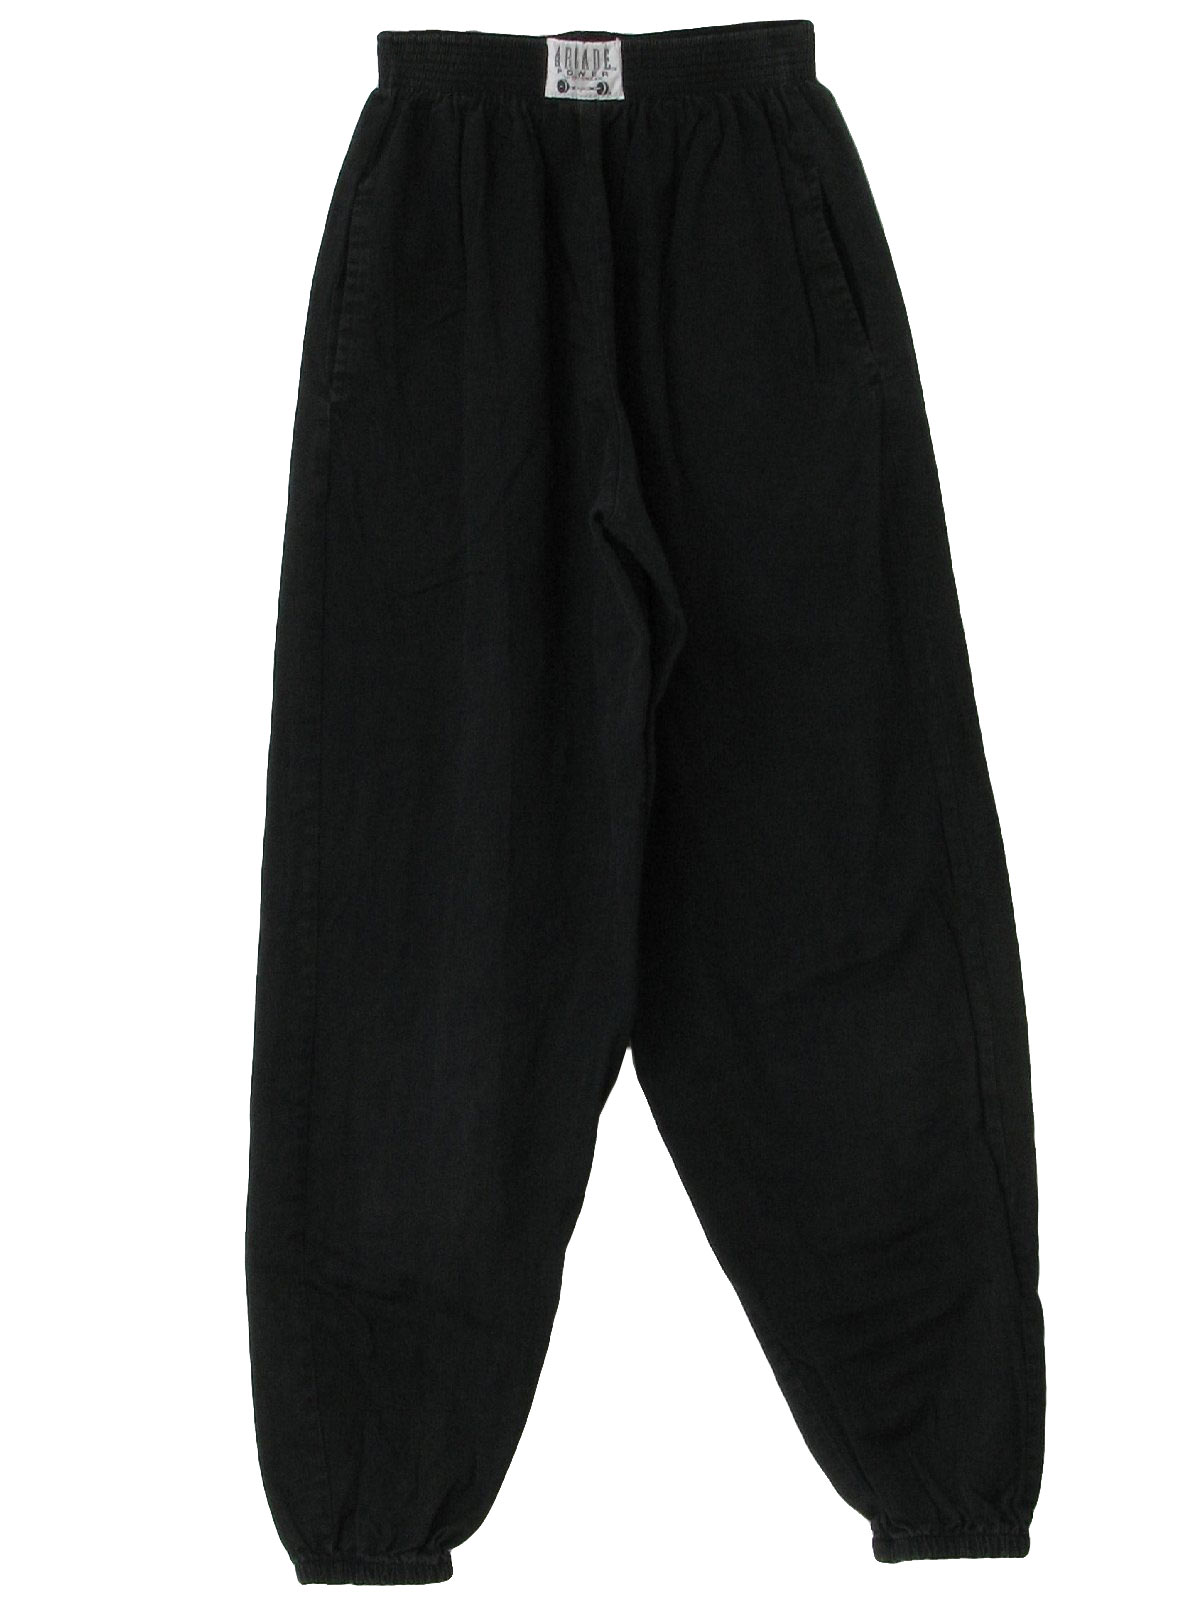 80s Pants Black Trousers Retro Pants Black Pants